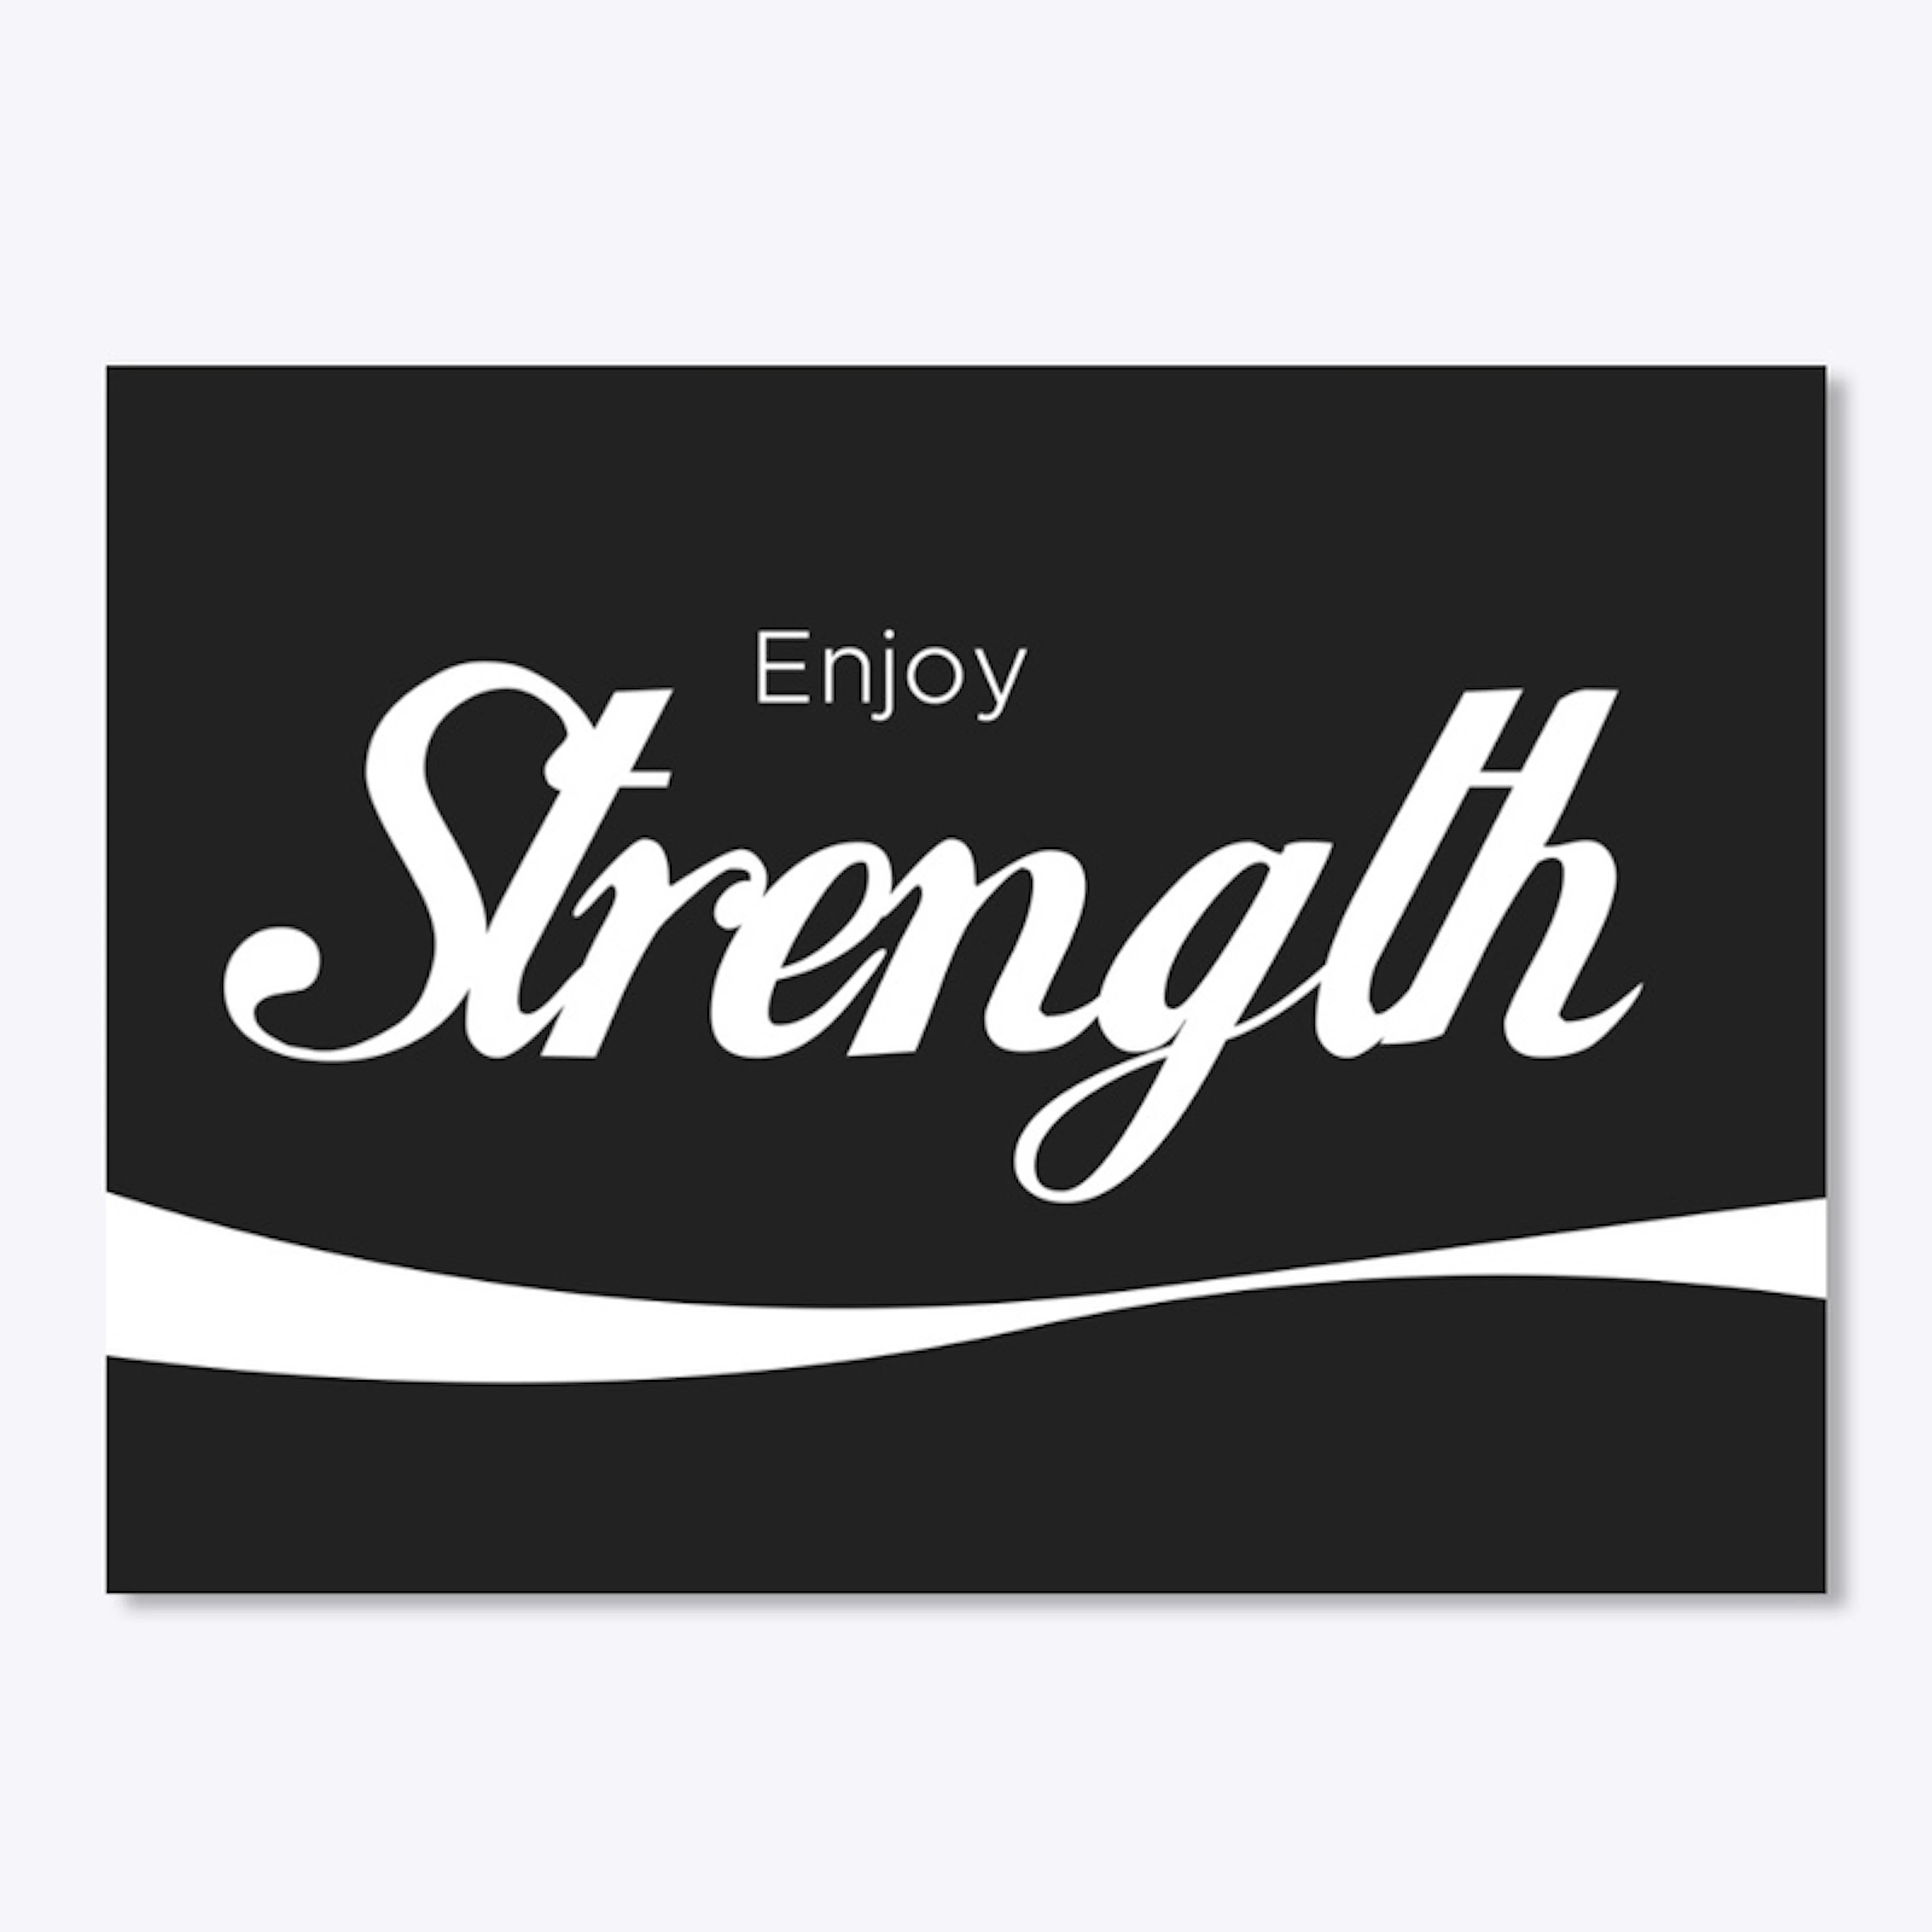 Enjoy Strength